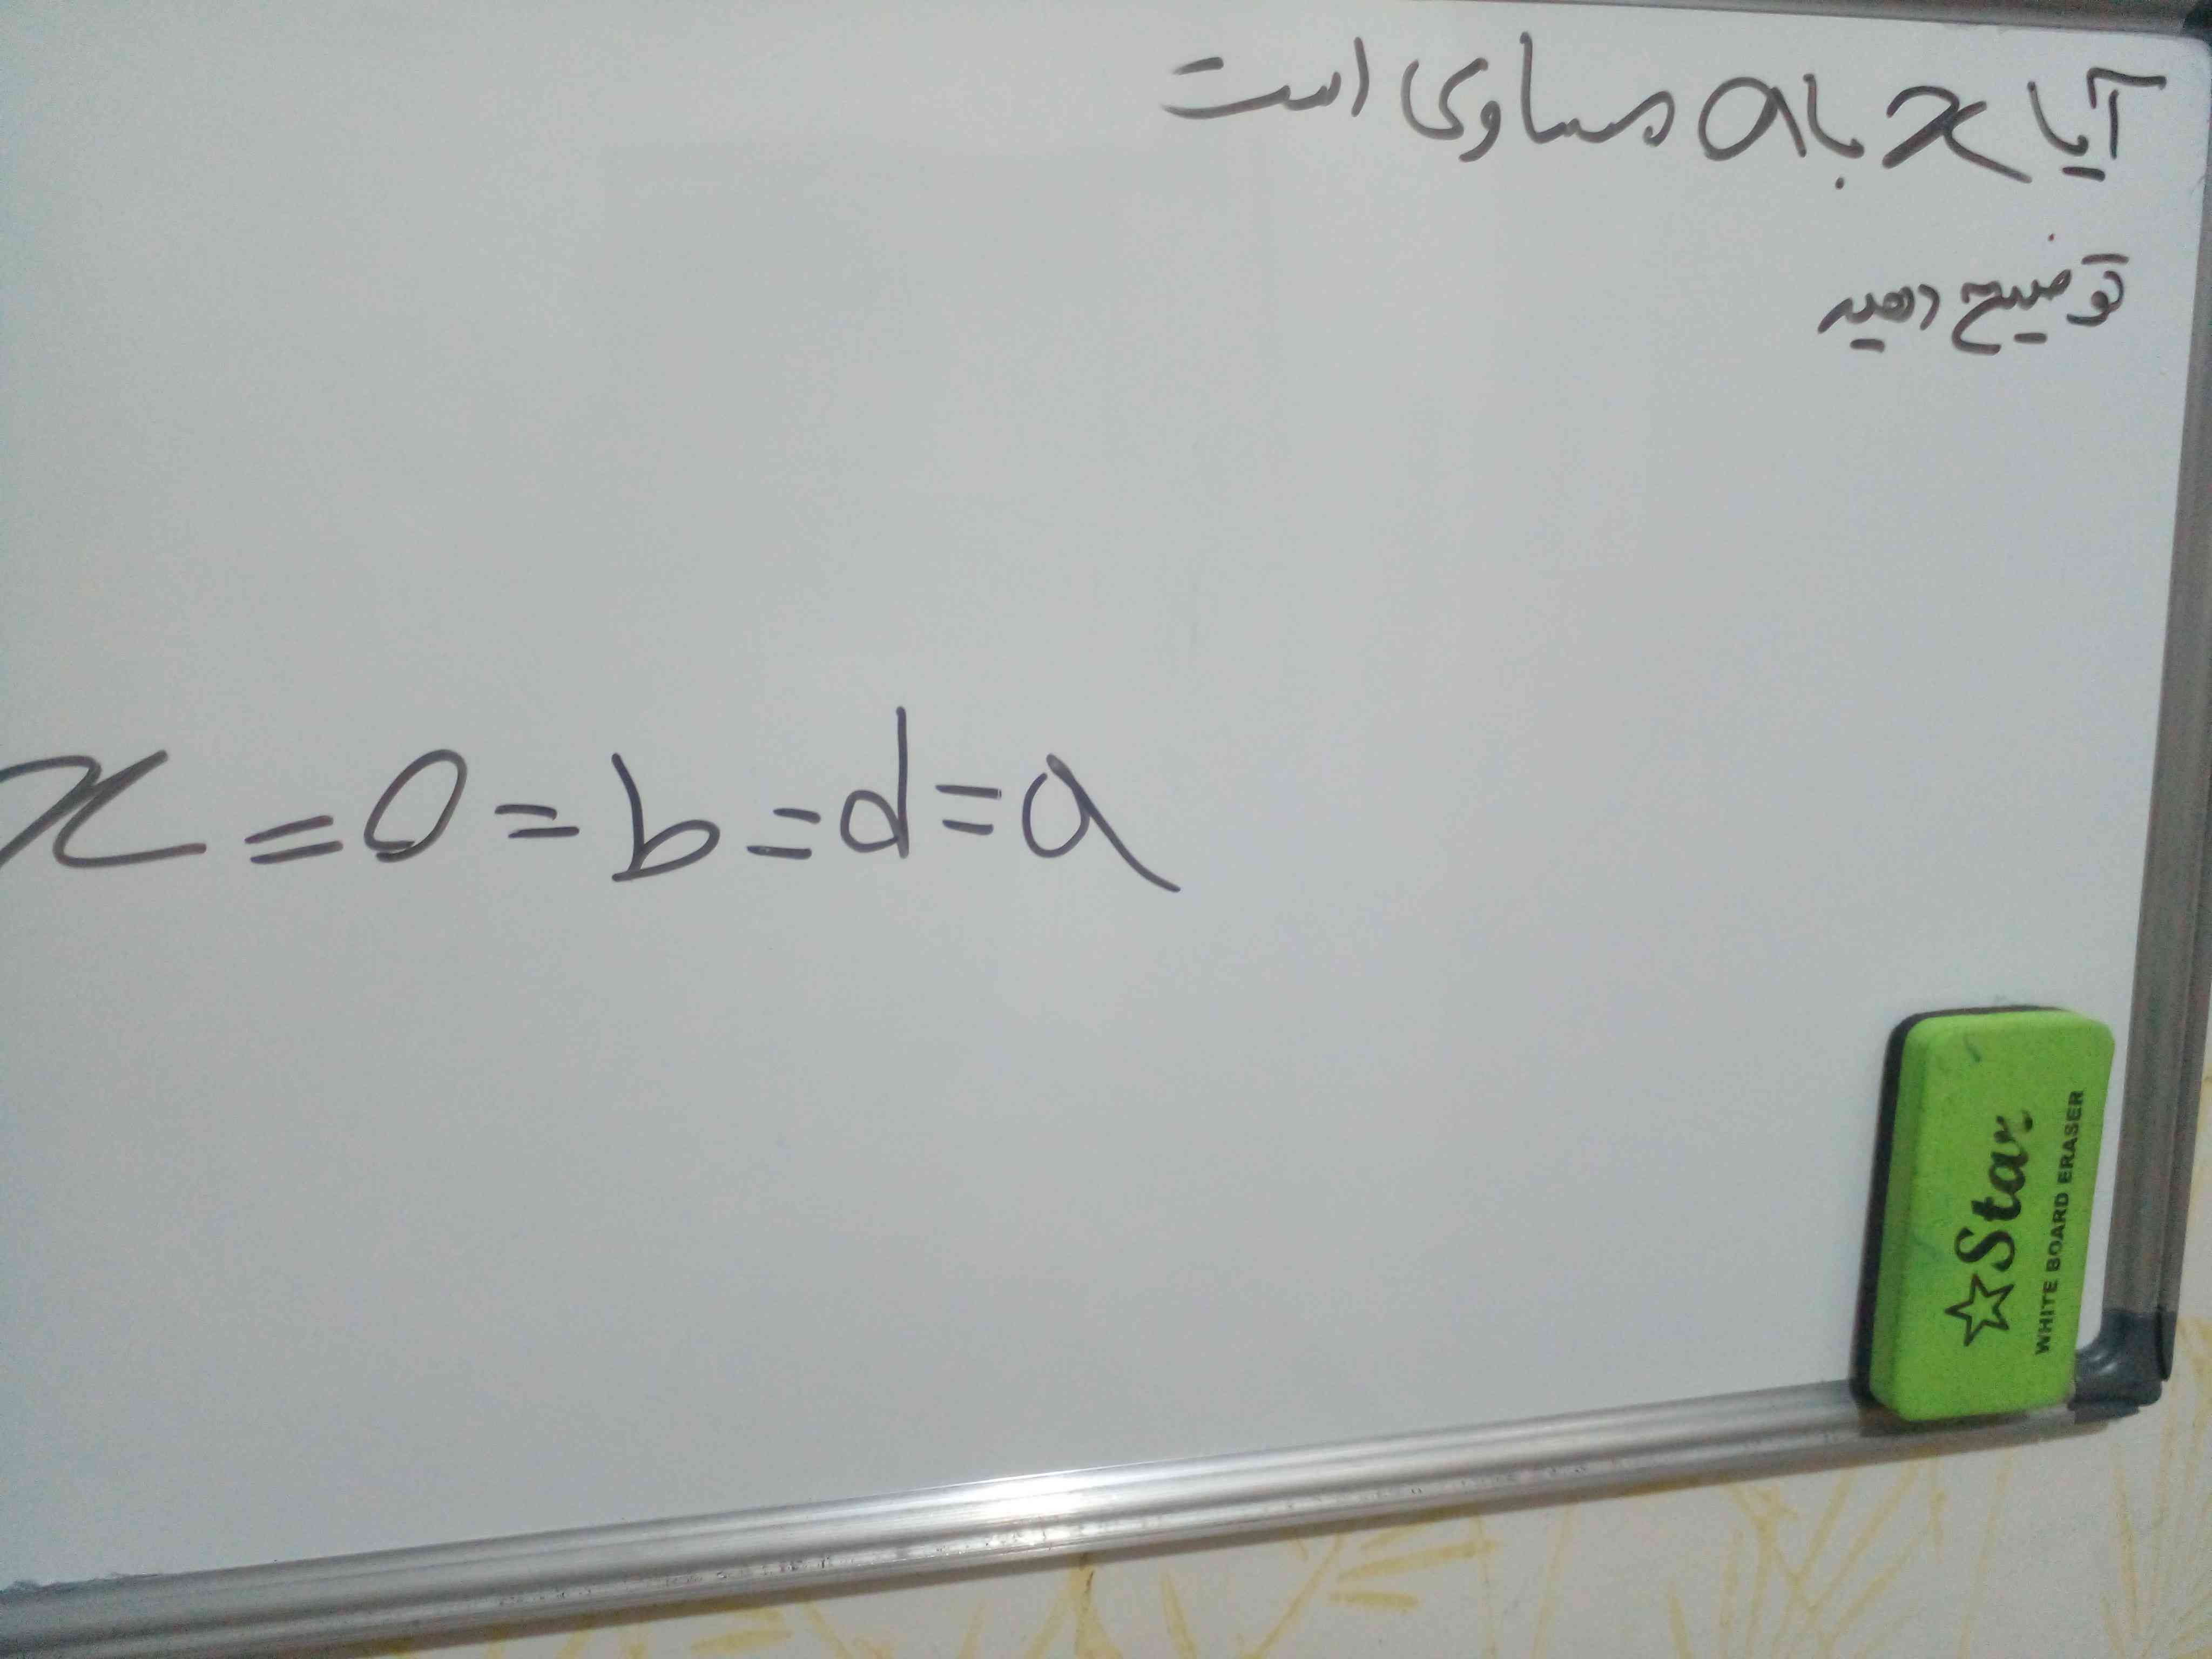 آیا x باa مساوی است توضیح دهید $$ x =o=b=d=a $$